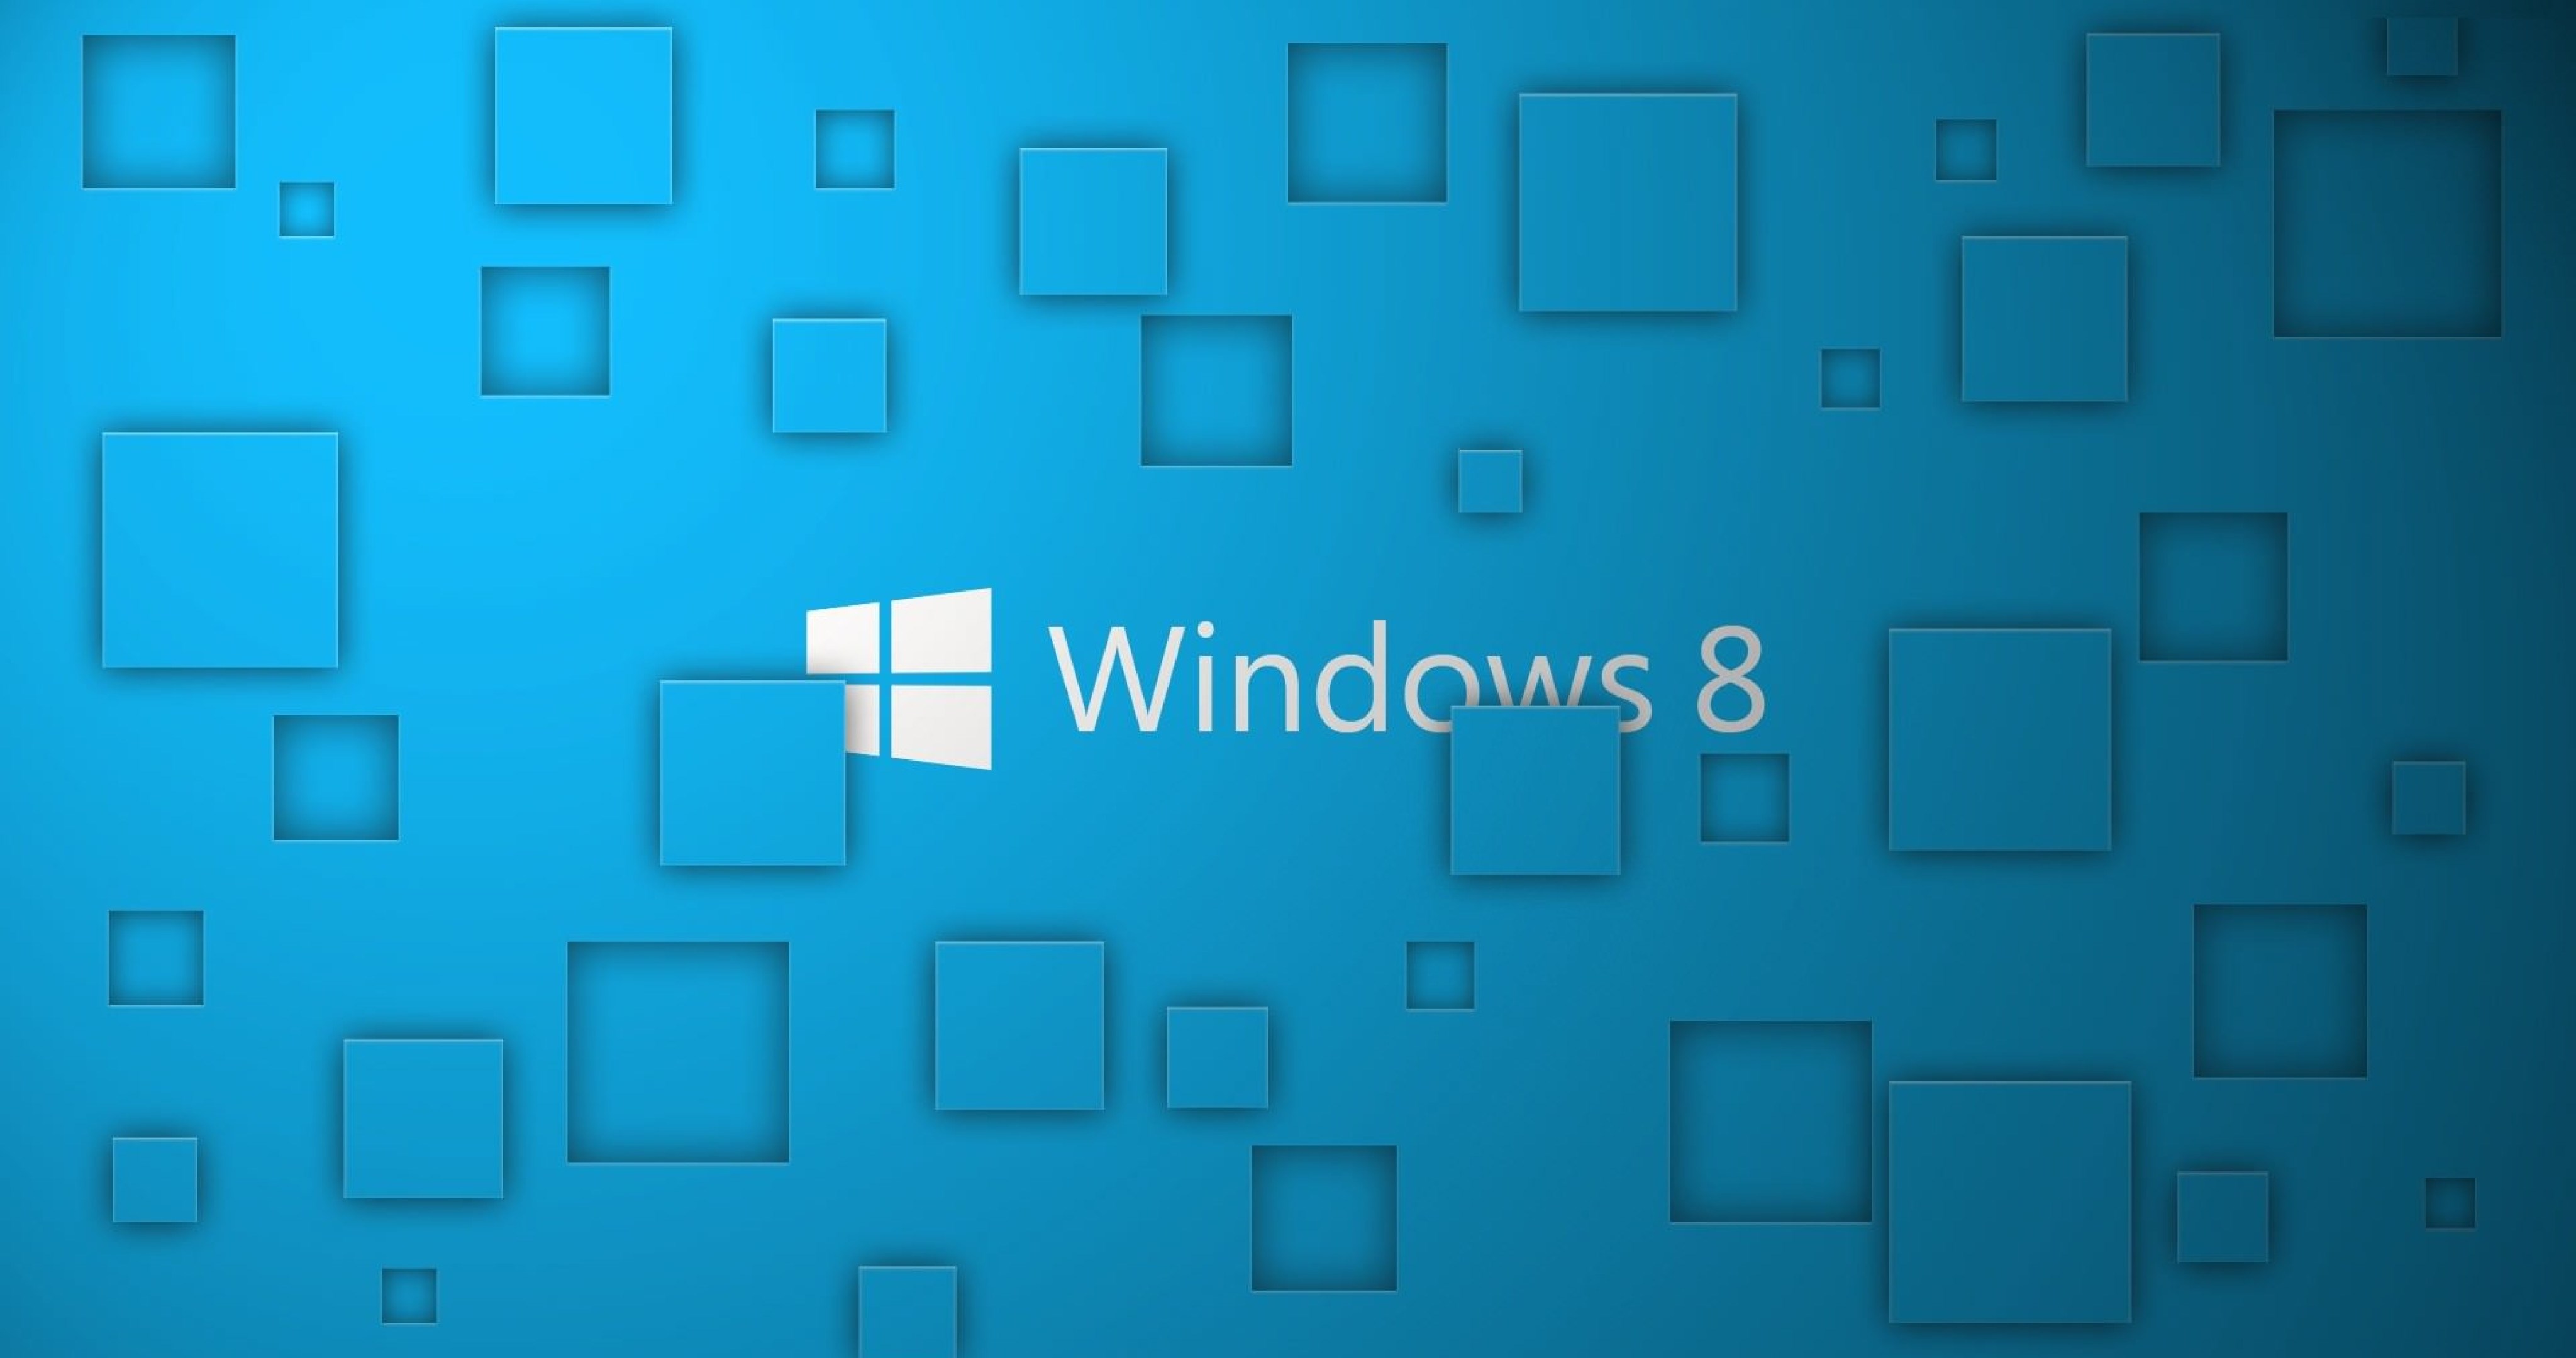 Windows 8 Wallpaper Hd Free Download - Background Desktop Windows 8 - HD Wallpaper 